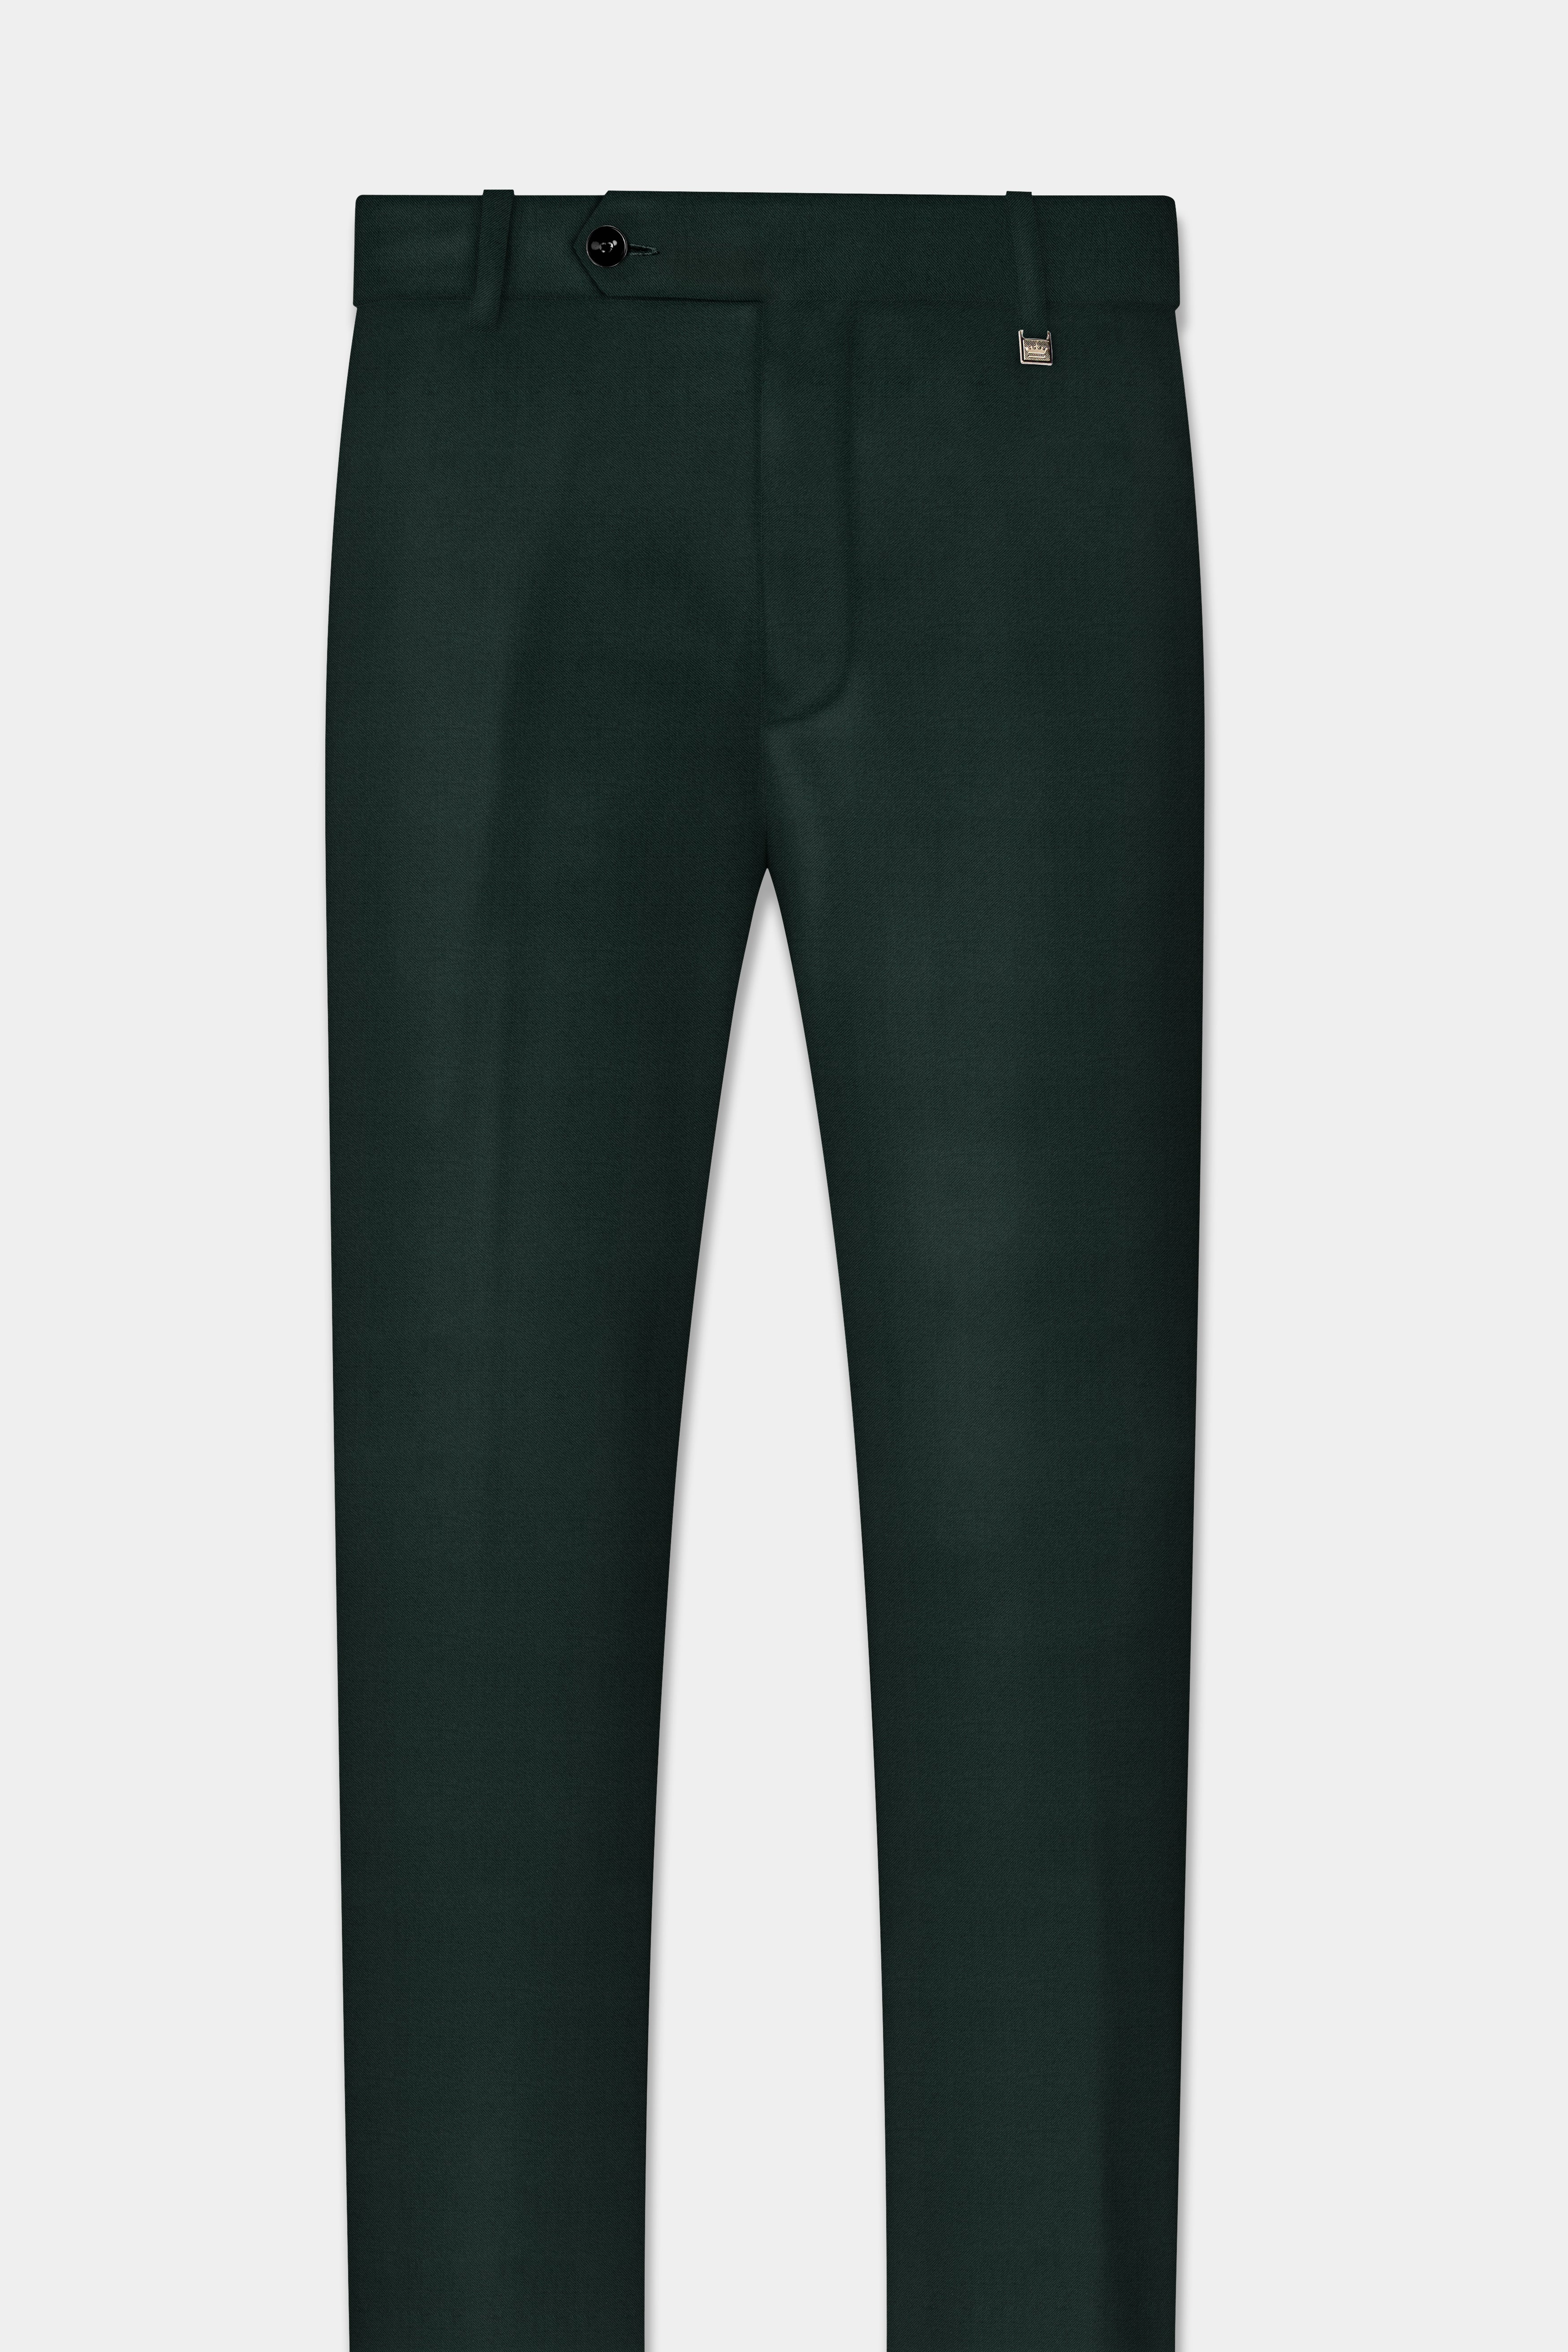 T.O. Mens Workwear Modern Fit Chino Pants - Walmart.com